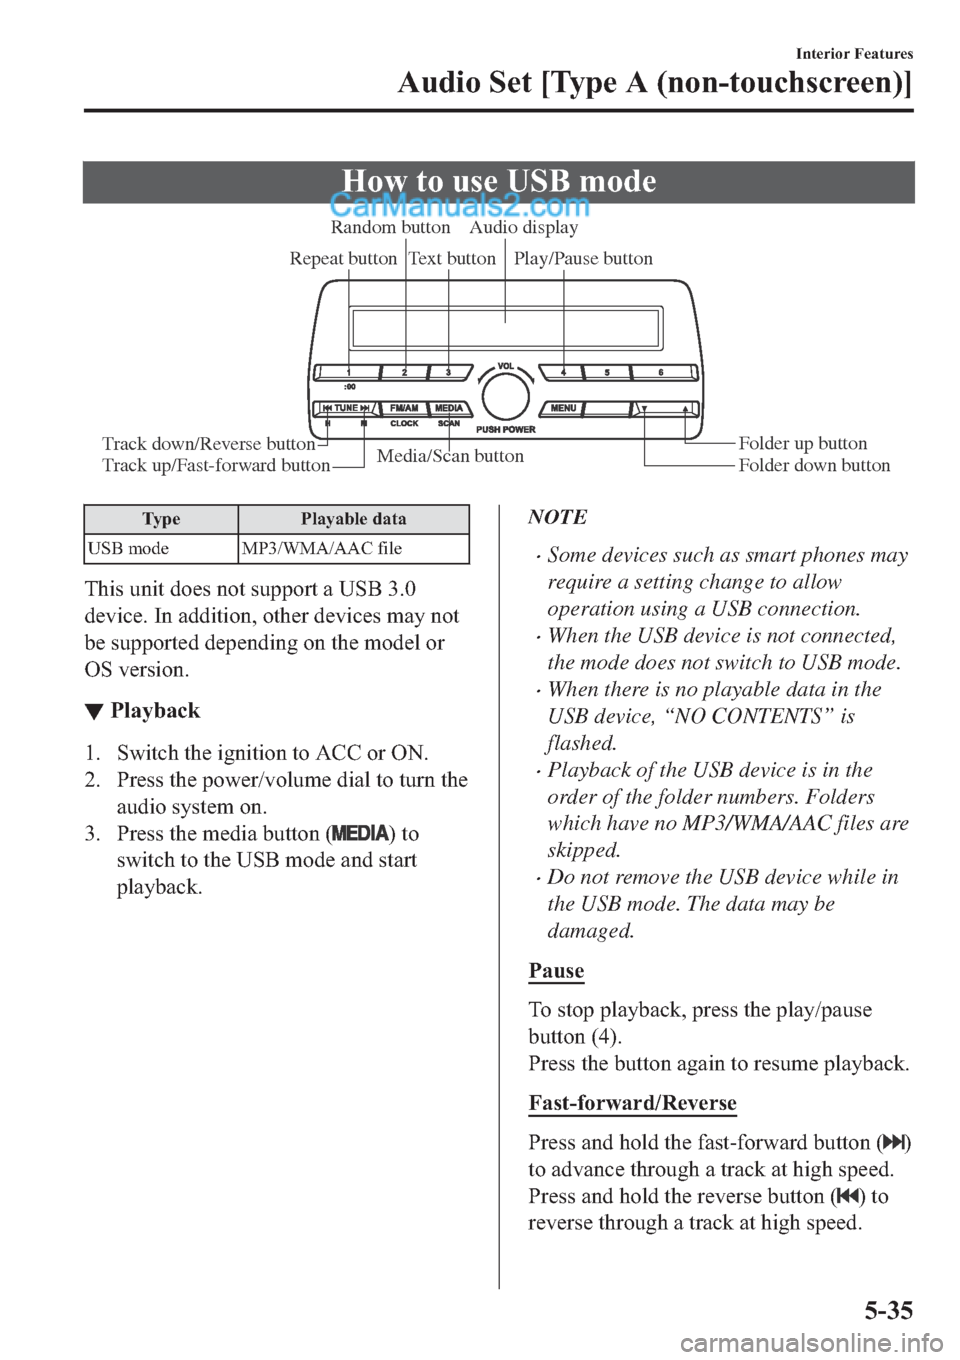 MAZDA MODEL 2 2019  Owners Manual (in English) �+�R�Z��W�R��X�V�H��8�6�%��P�R�G�H
Media/Scan button
Folder down button Folder up button Play/Pause button Random button
Repeat buttonAudio display
Text button
Track down/Reverse button
Track up/F